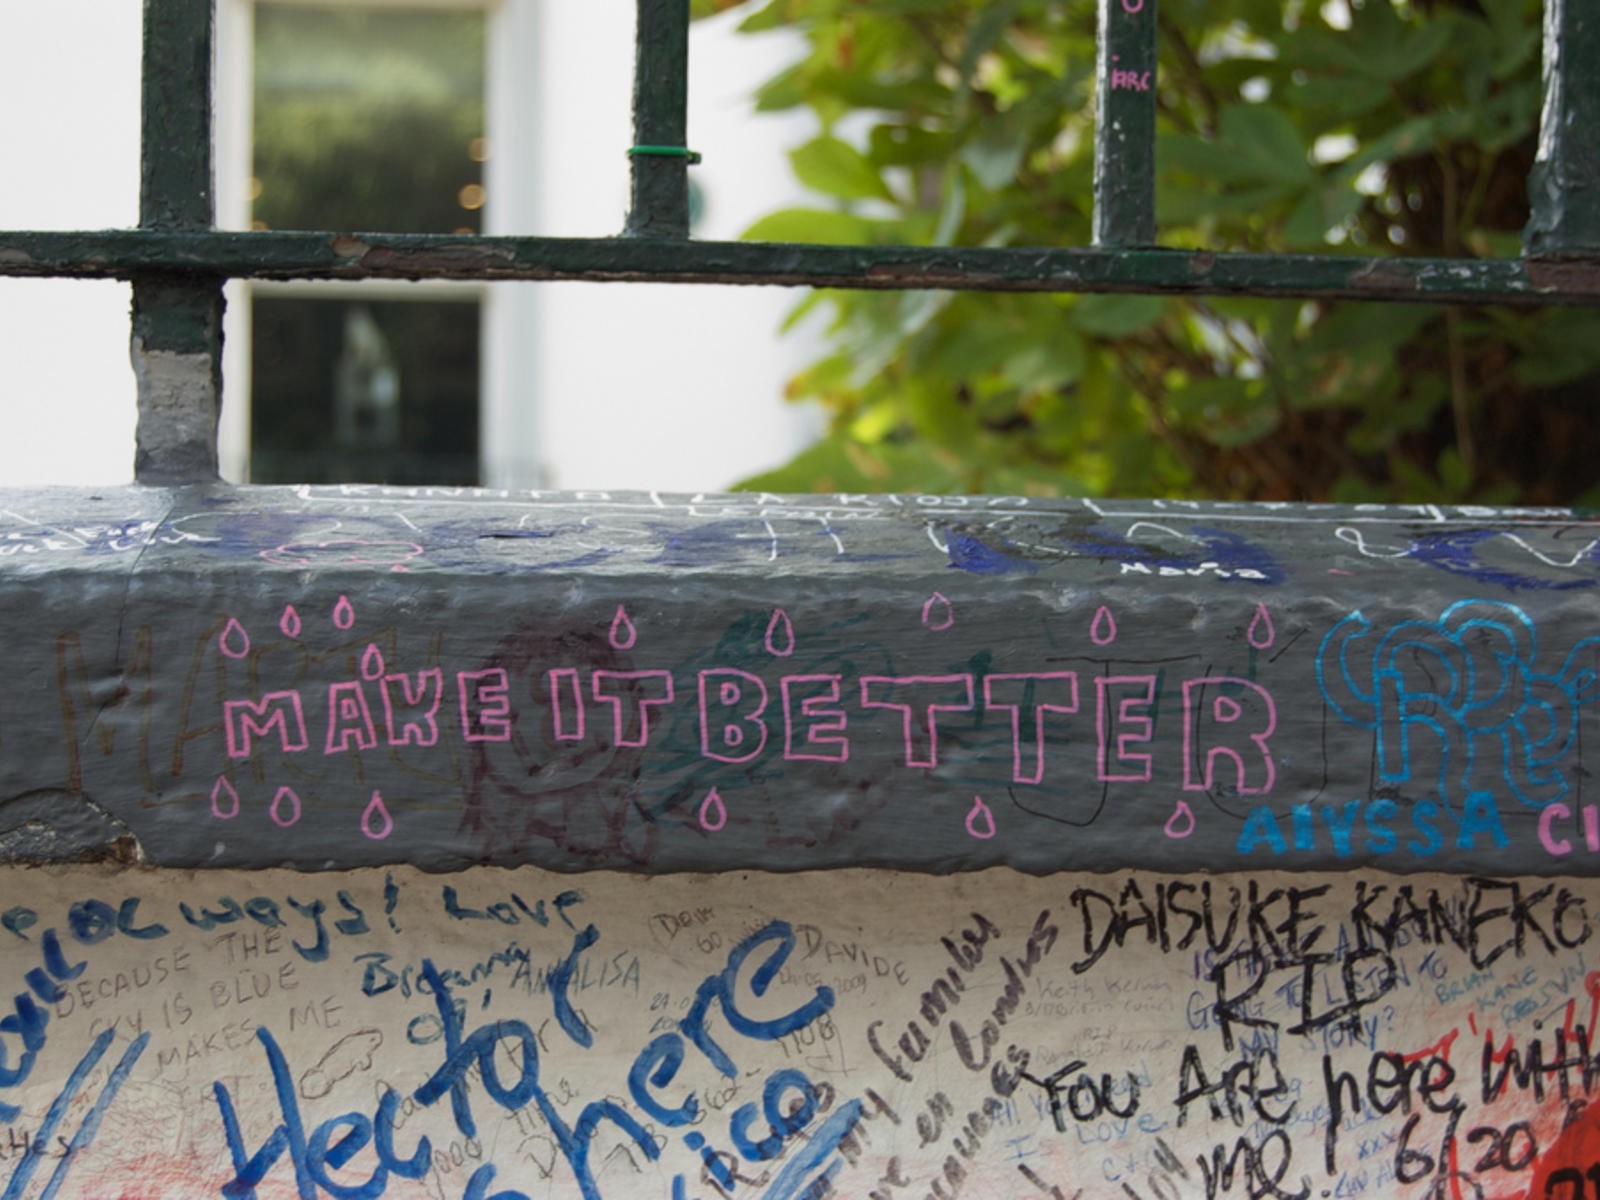 Graffiti on a wall. The most prominent graffiti reads "MAKE IT BETTER."